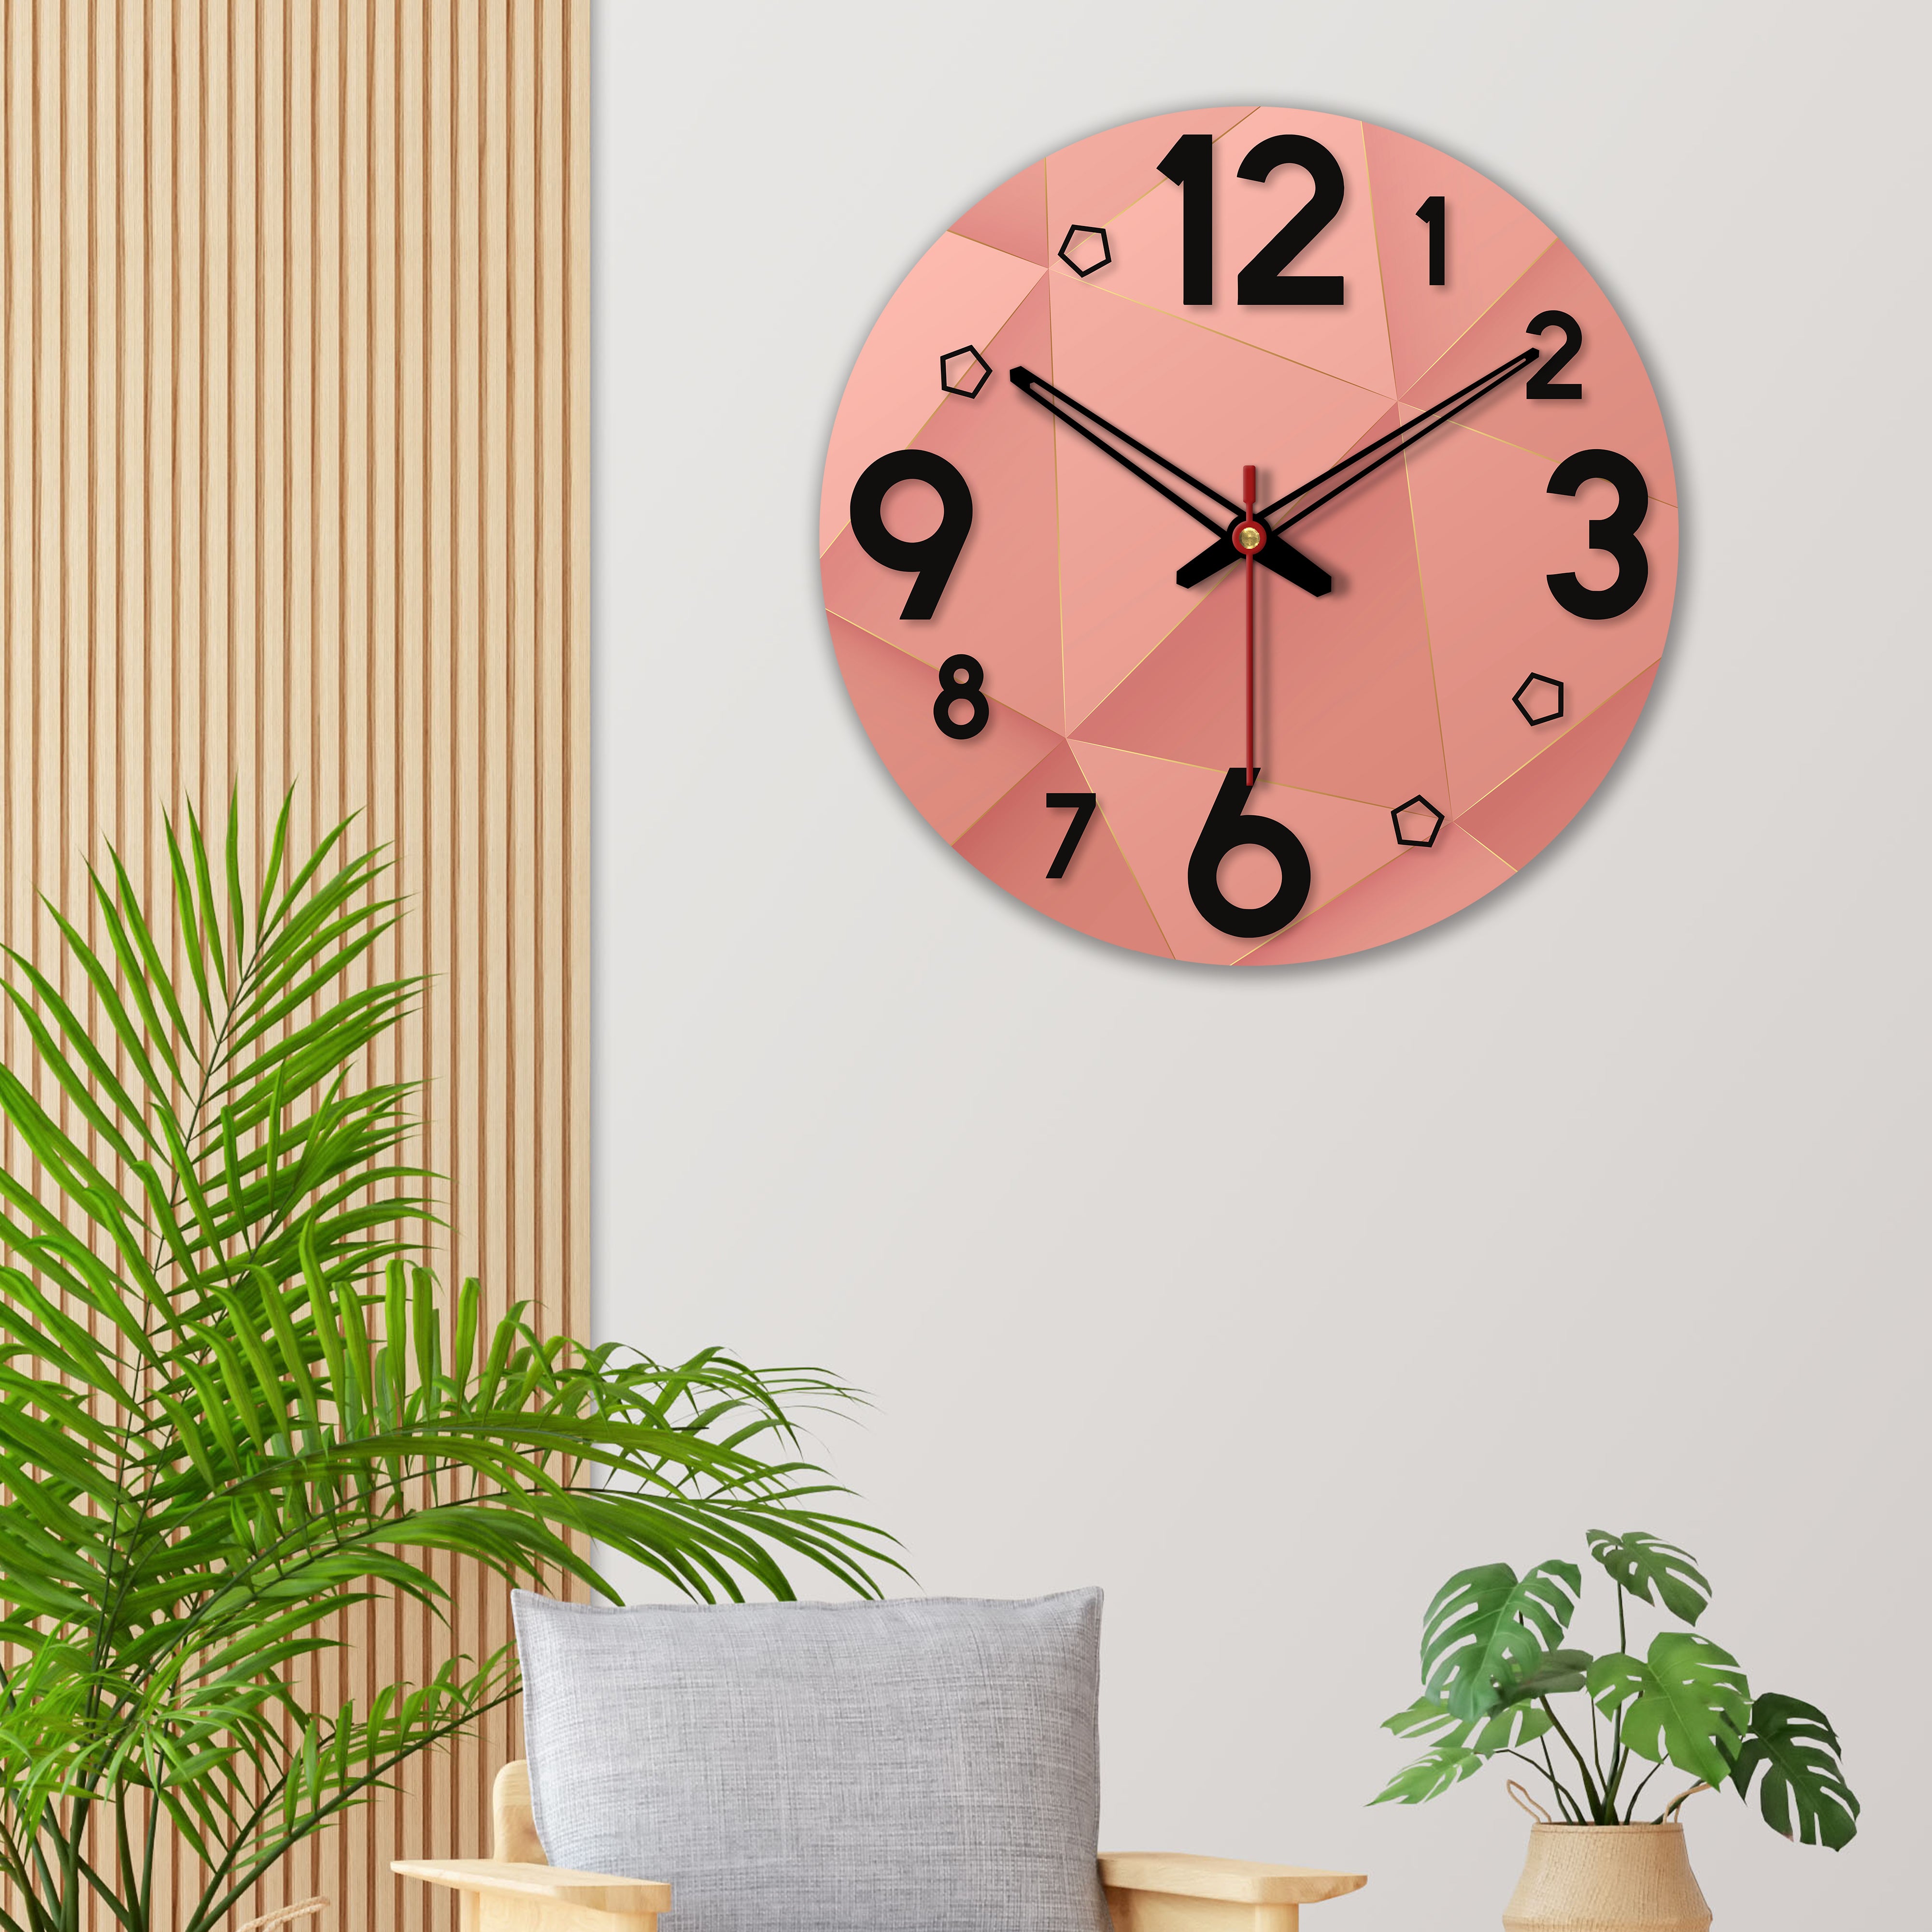 Three D Abstract Shapes Wooden Wall Clock